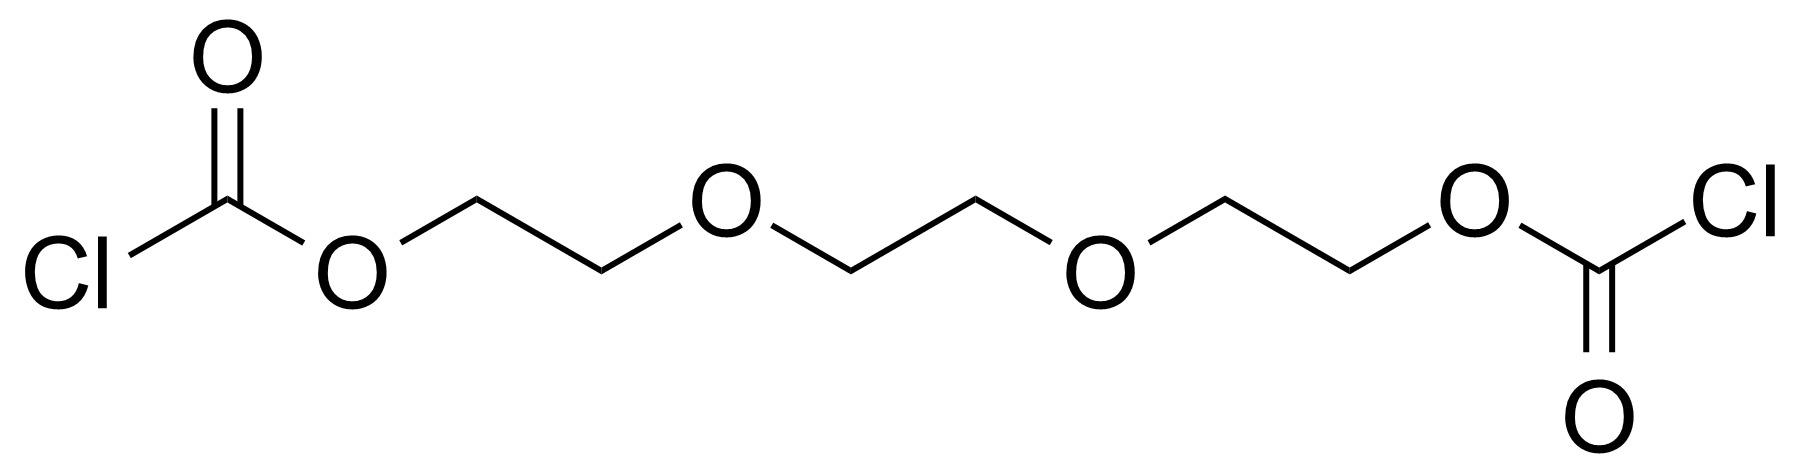 Structure of Tri(ethylene glycol) bis(chloroformate)